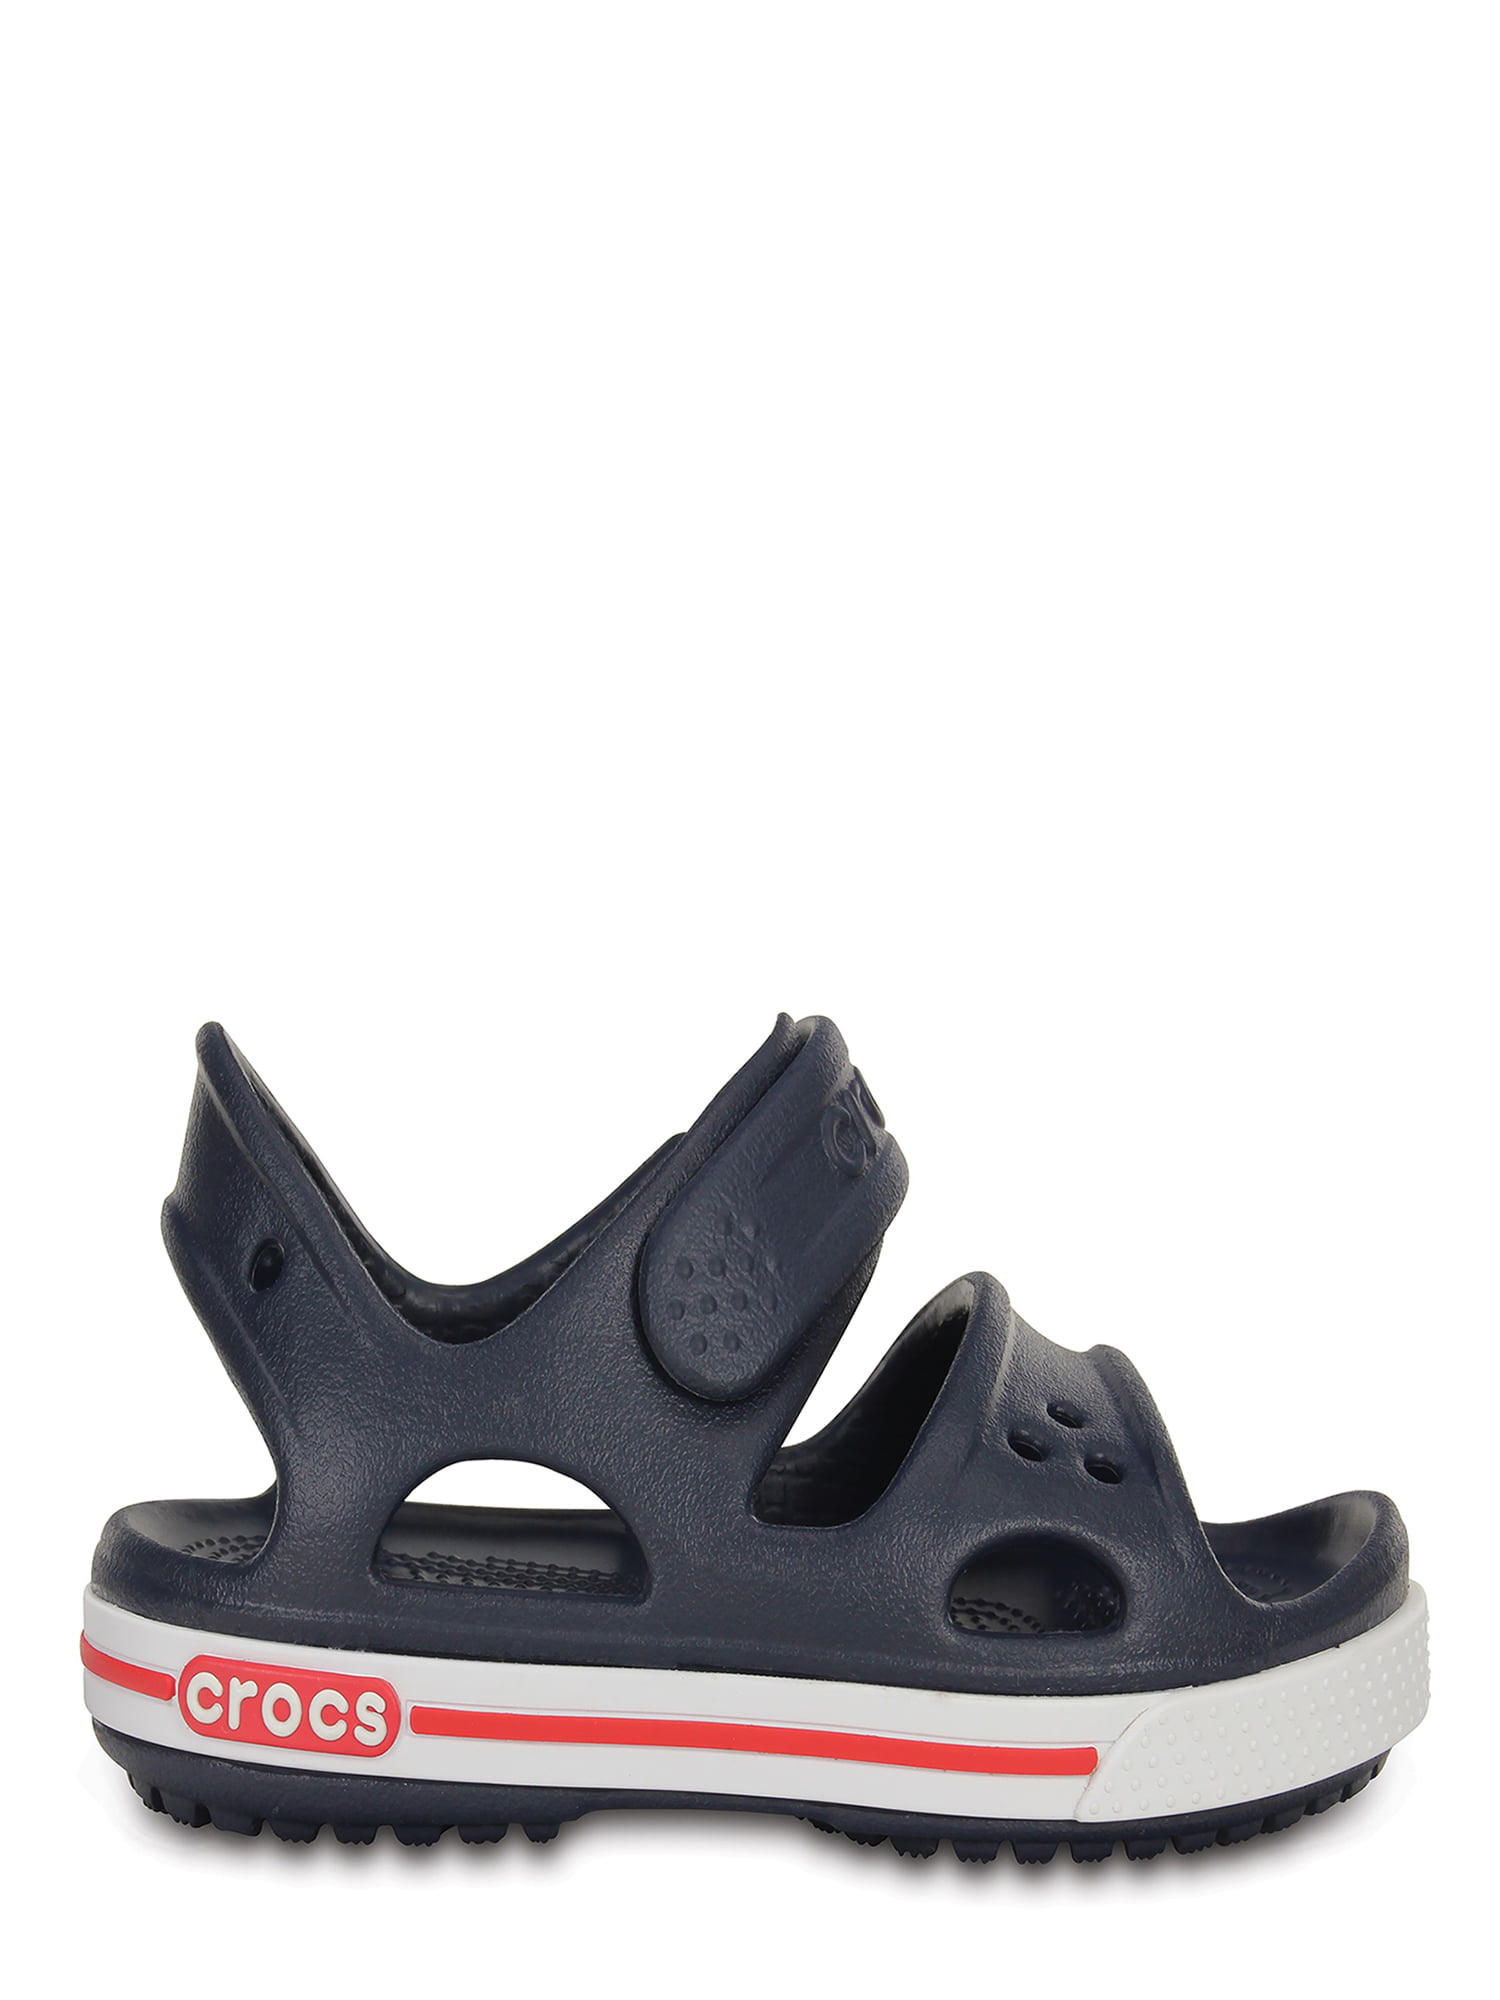 Crocs Childrens/Kids Crocband Sandals FS5362 